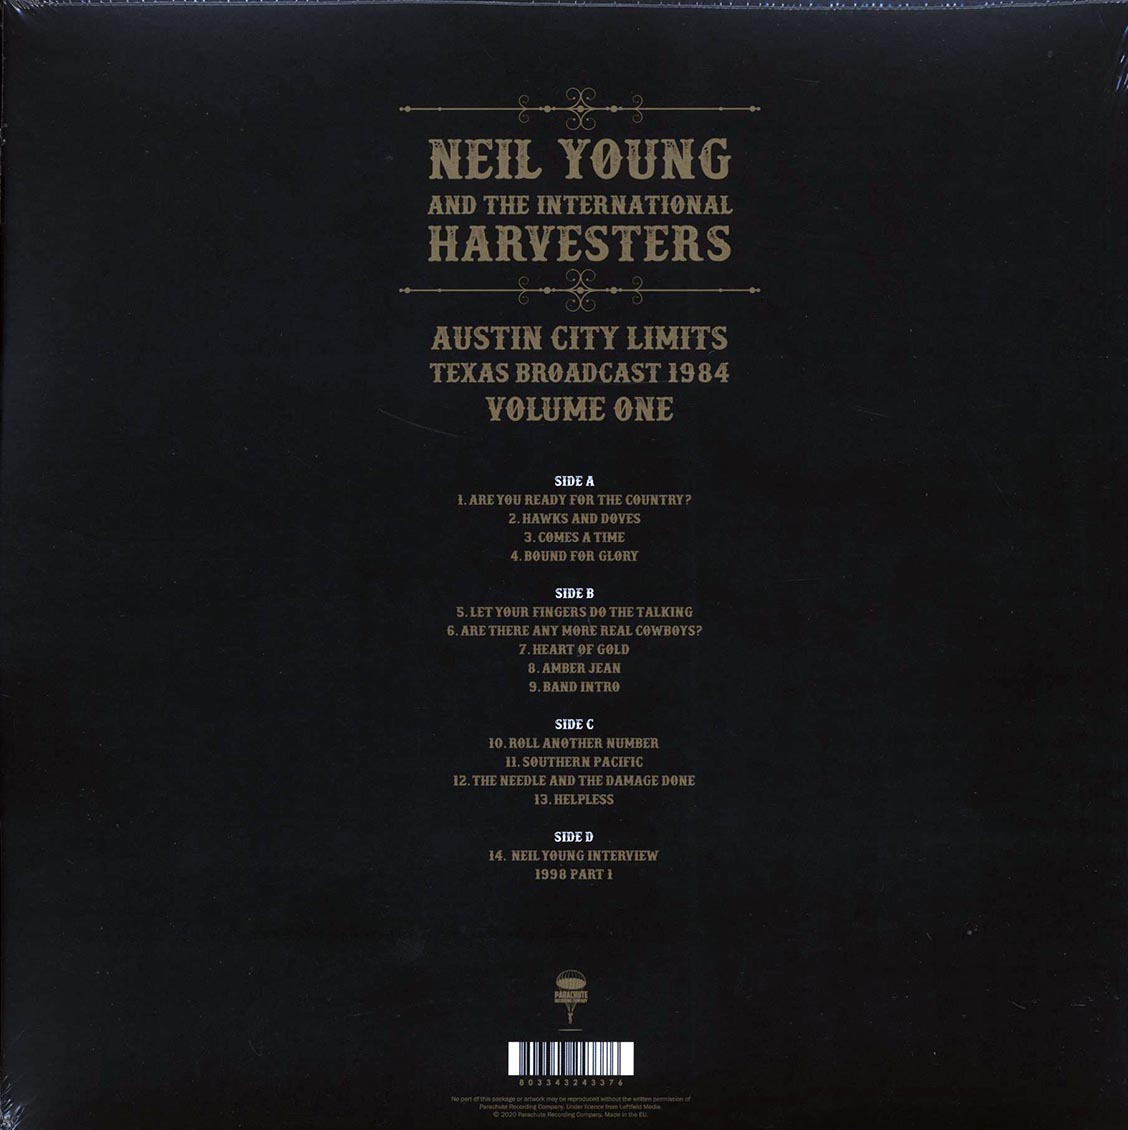 Neil Young & The International Harvesters - Austin City Limits Volume 1: Texas Broadcast 1984 (2xLP) - Vinyl LP, LP